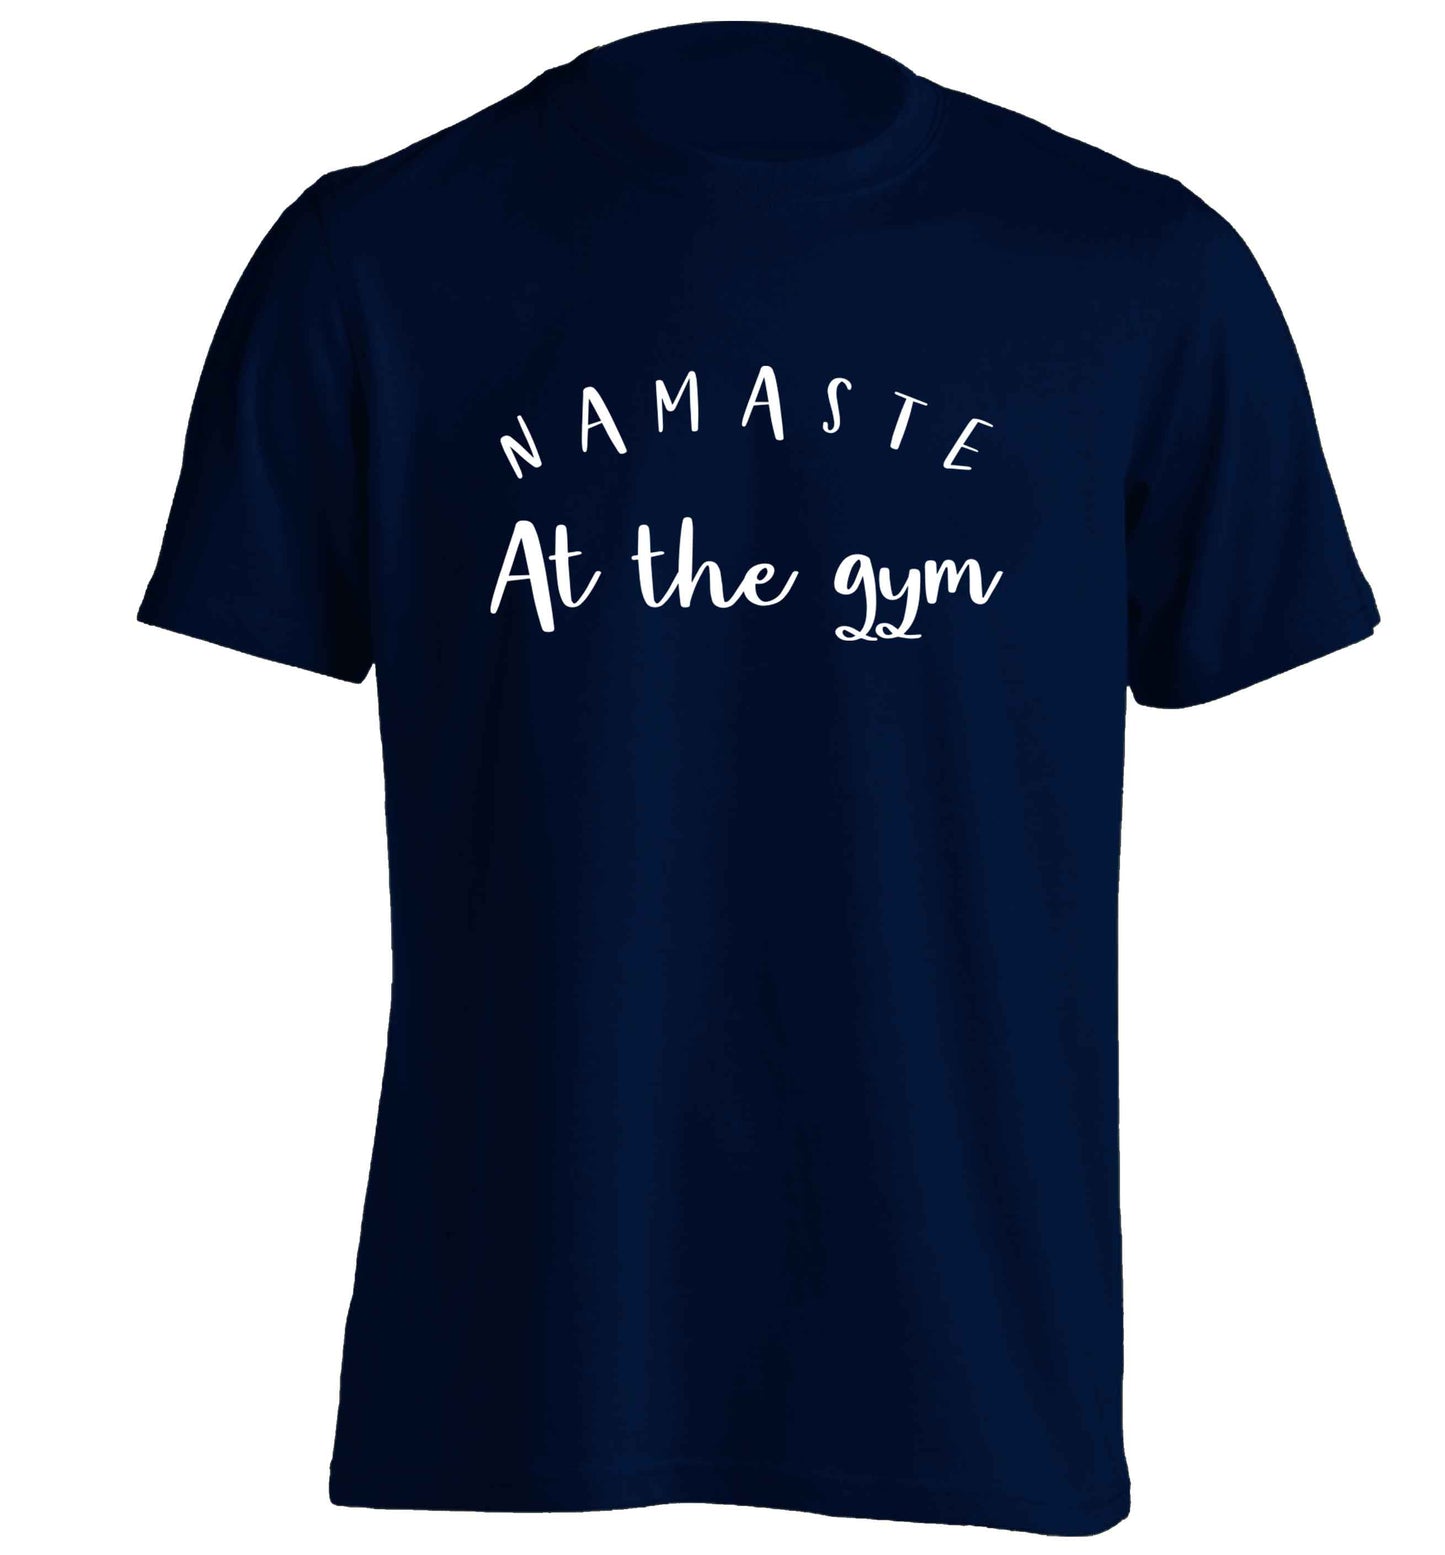 Namaste at the gym adults unisex navy Tshirt 2XL